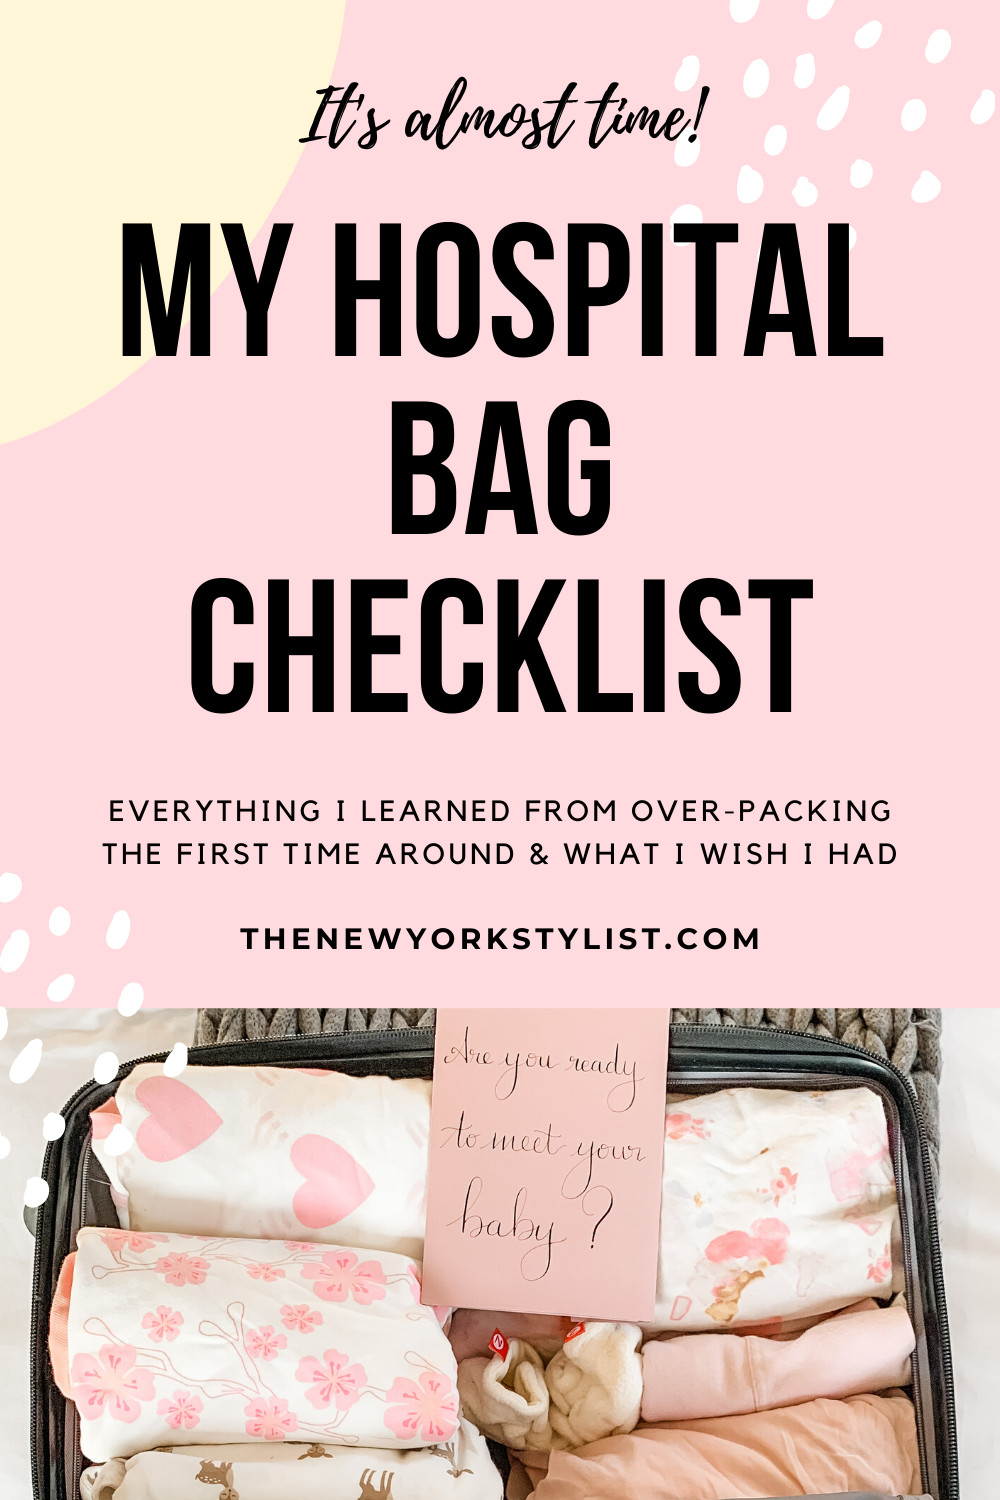 Hospital Bag Checklist Australia